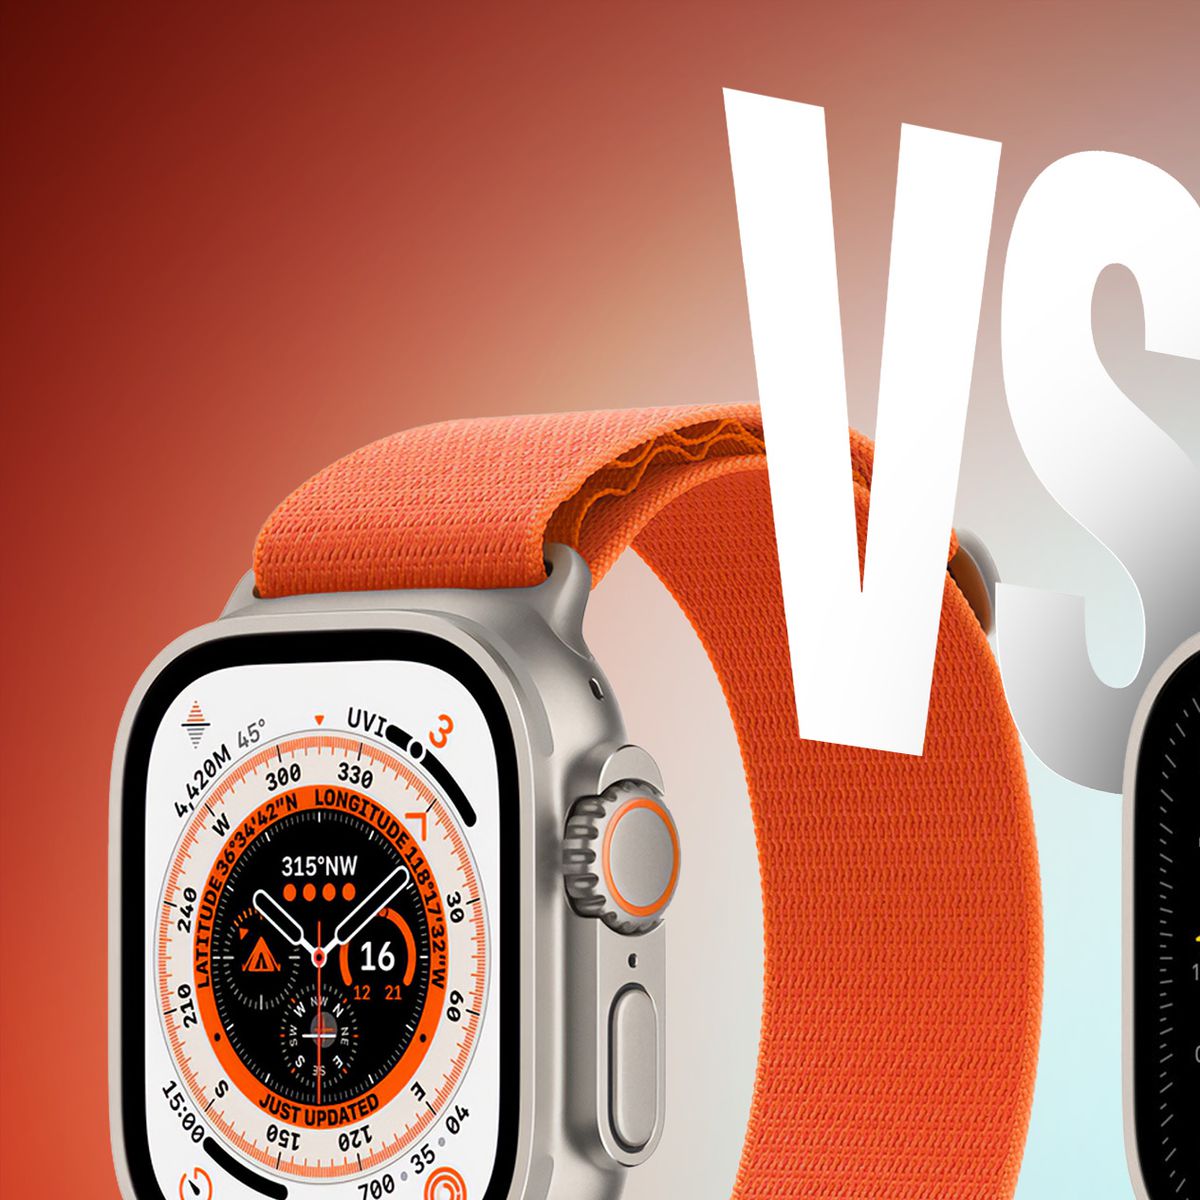 Apple Watch Ultra 2 vs Apple Watch Ultra: Clash of the titans